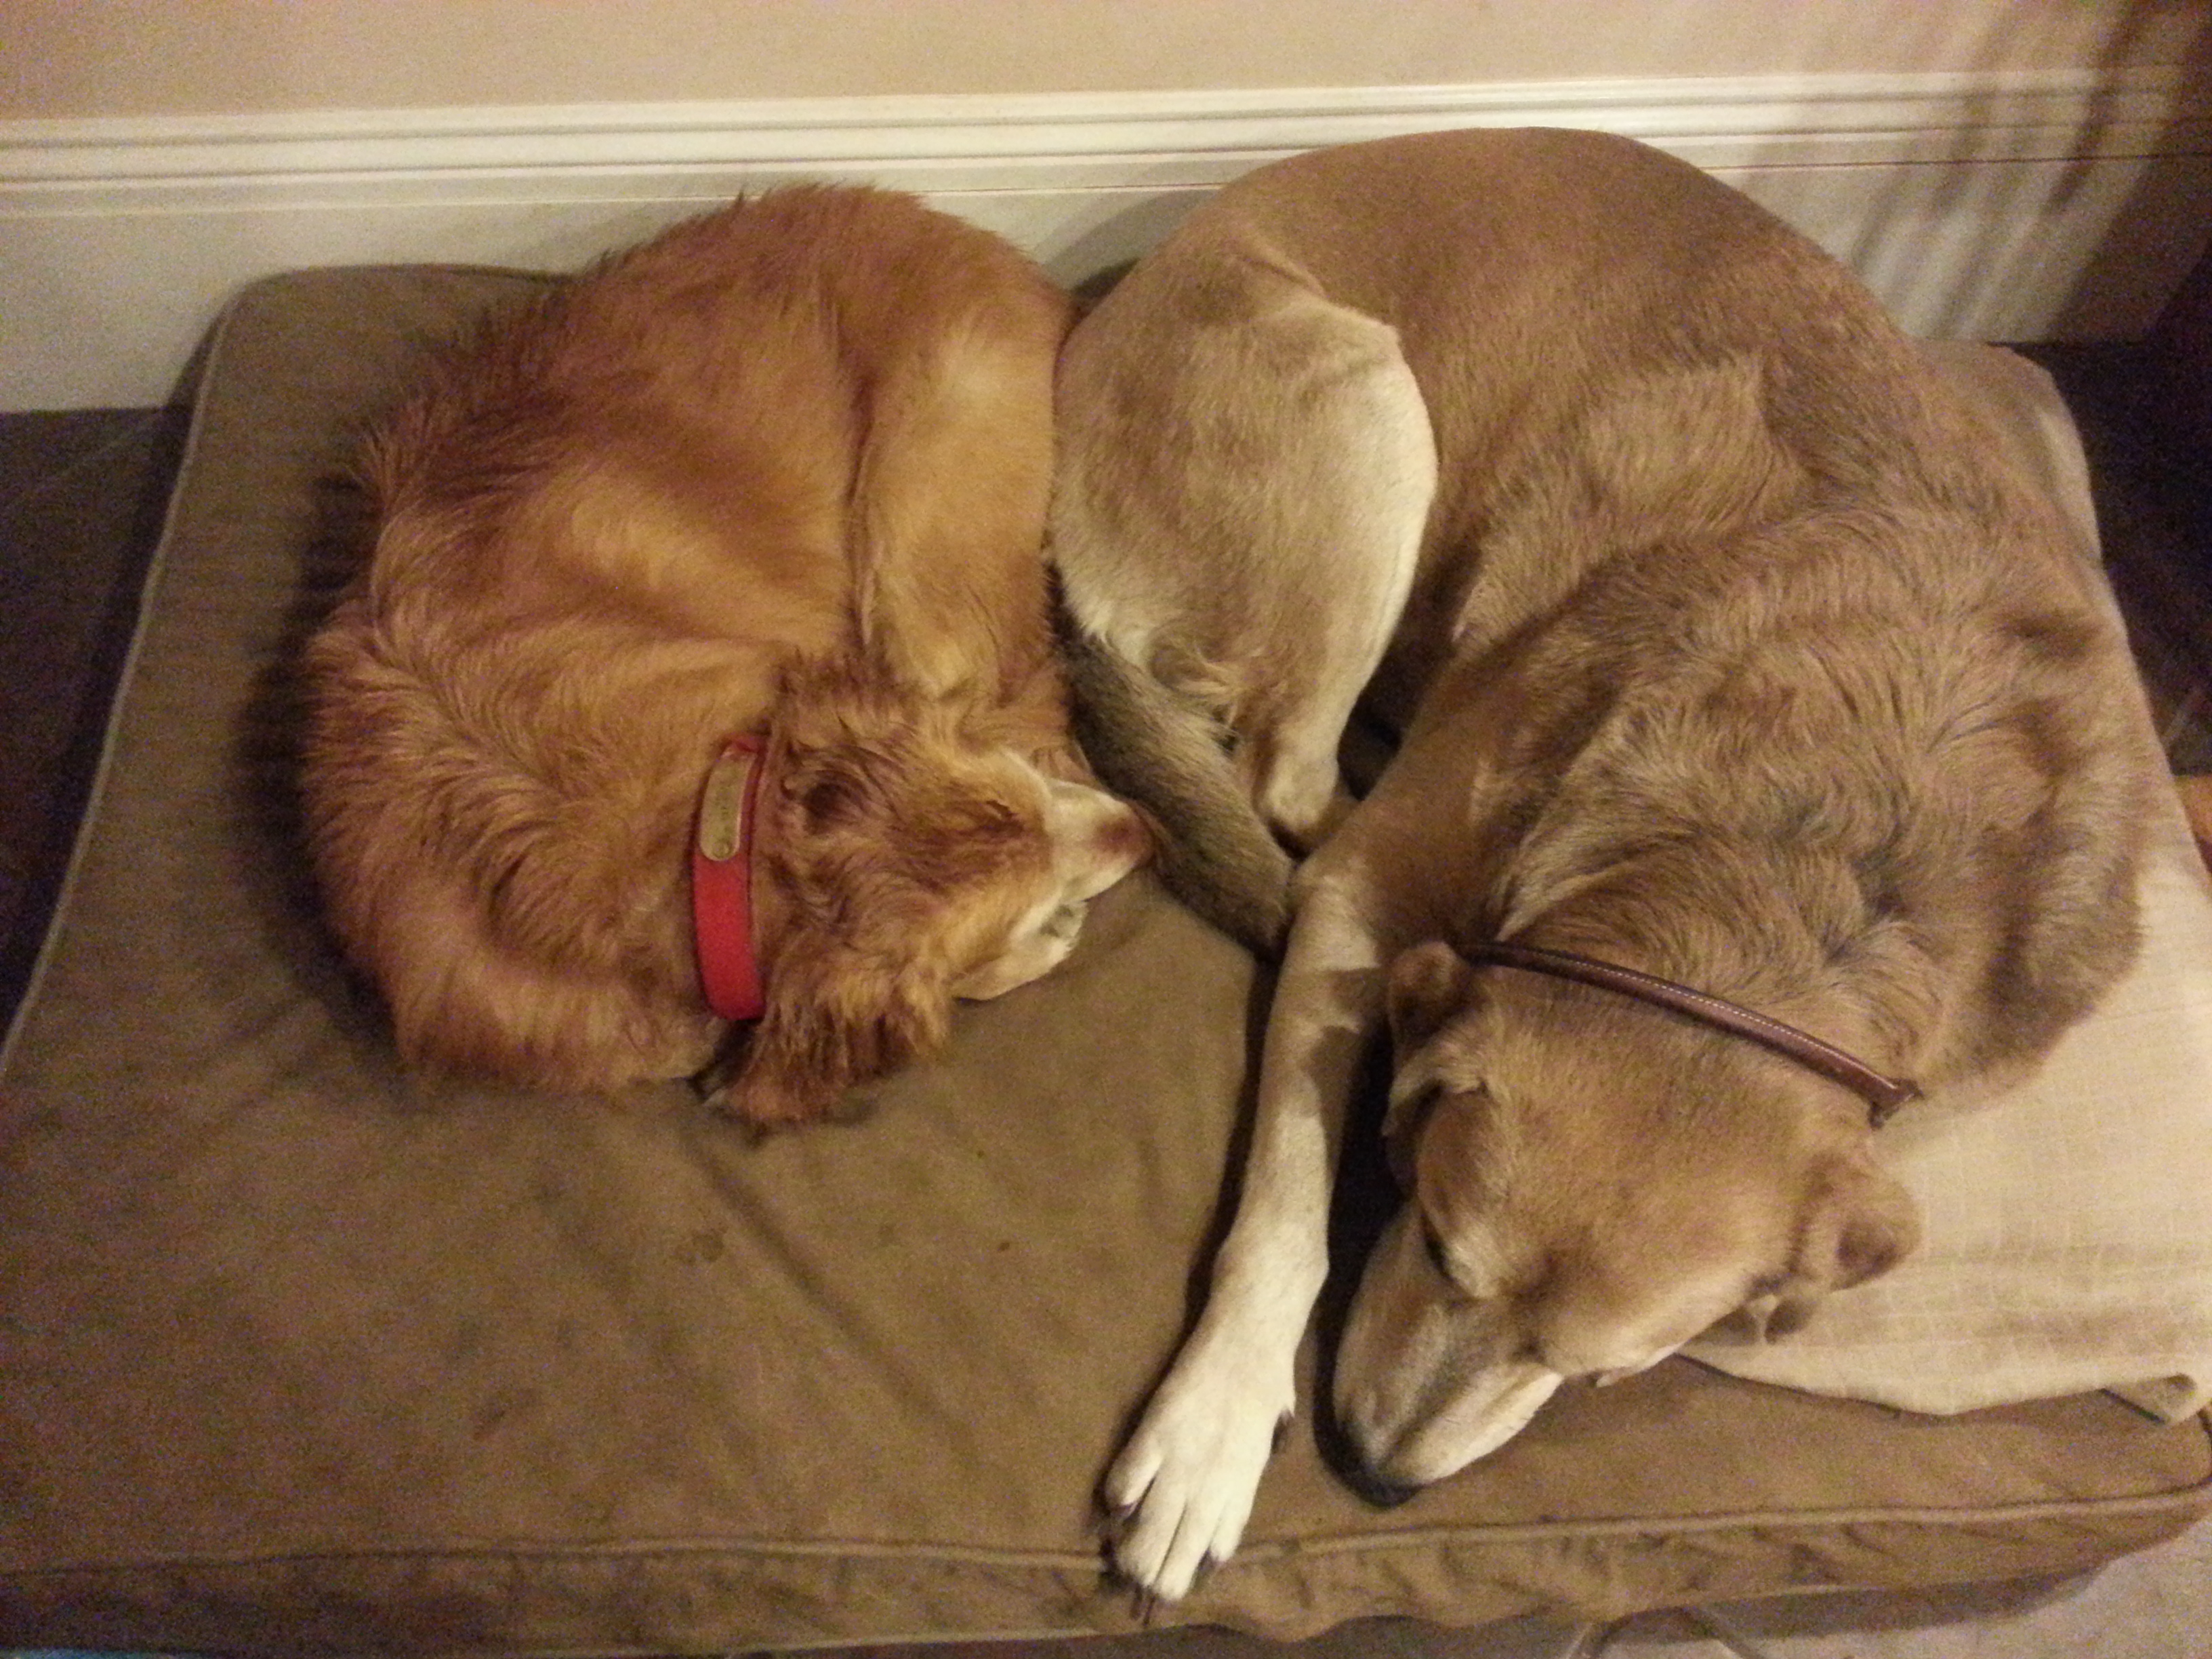 Stella and Sherman, same dog bed